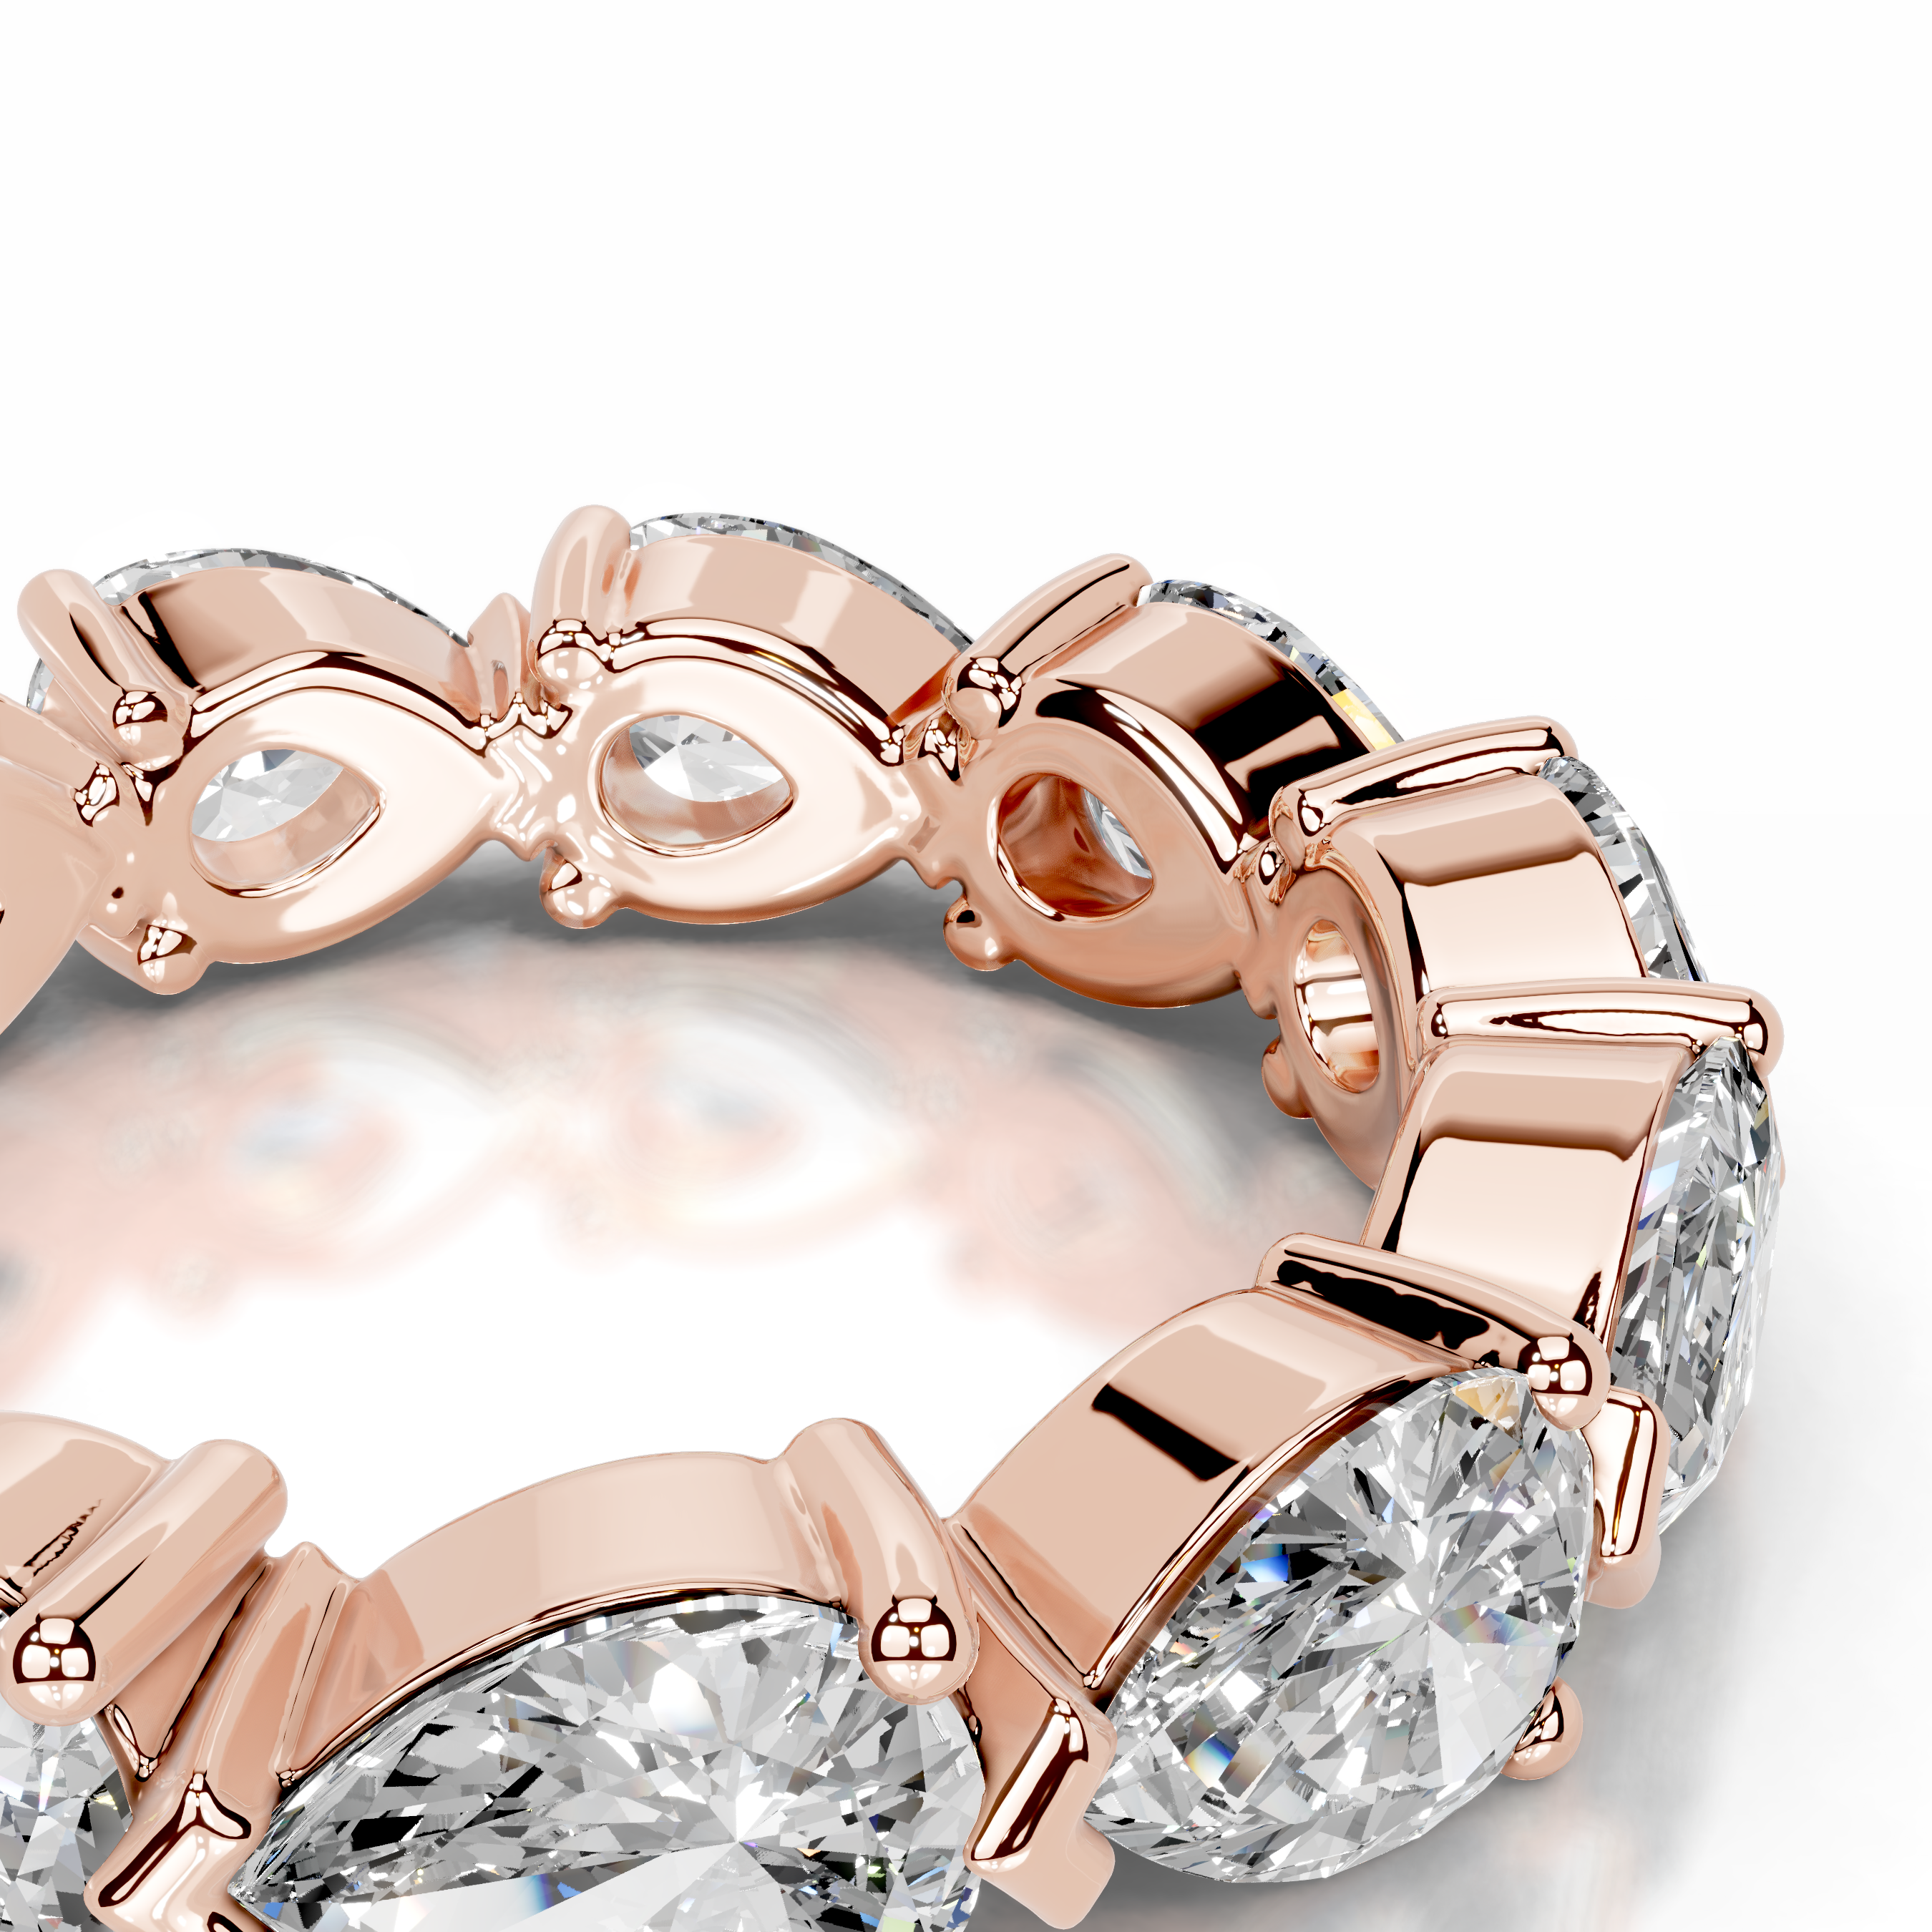 Tyrell Diamond Wedding Ring   (4.50 Carat) -14K Rose Gold